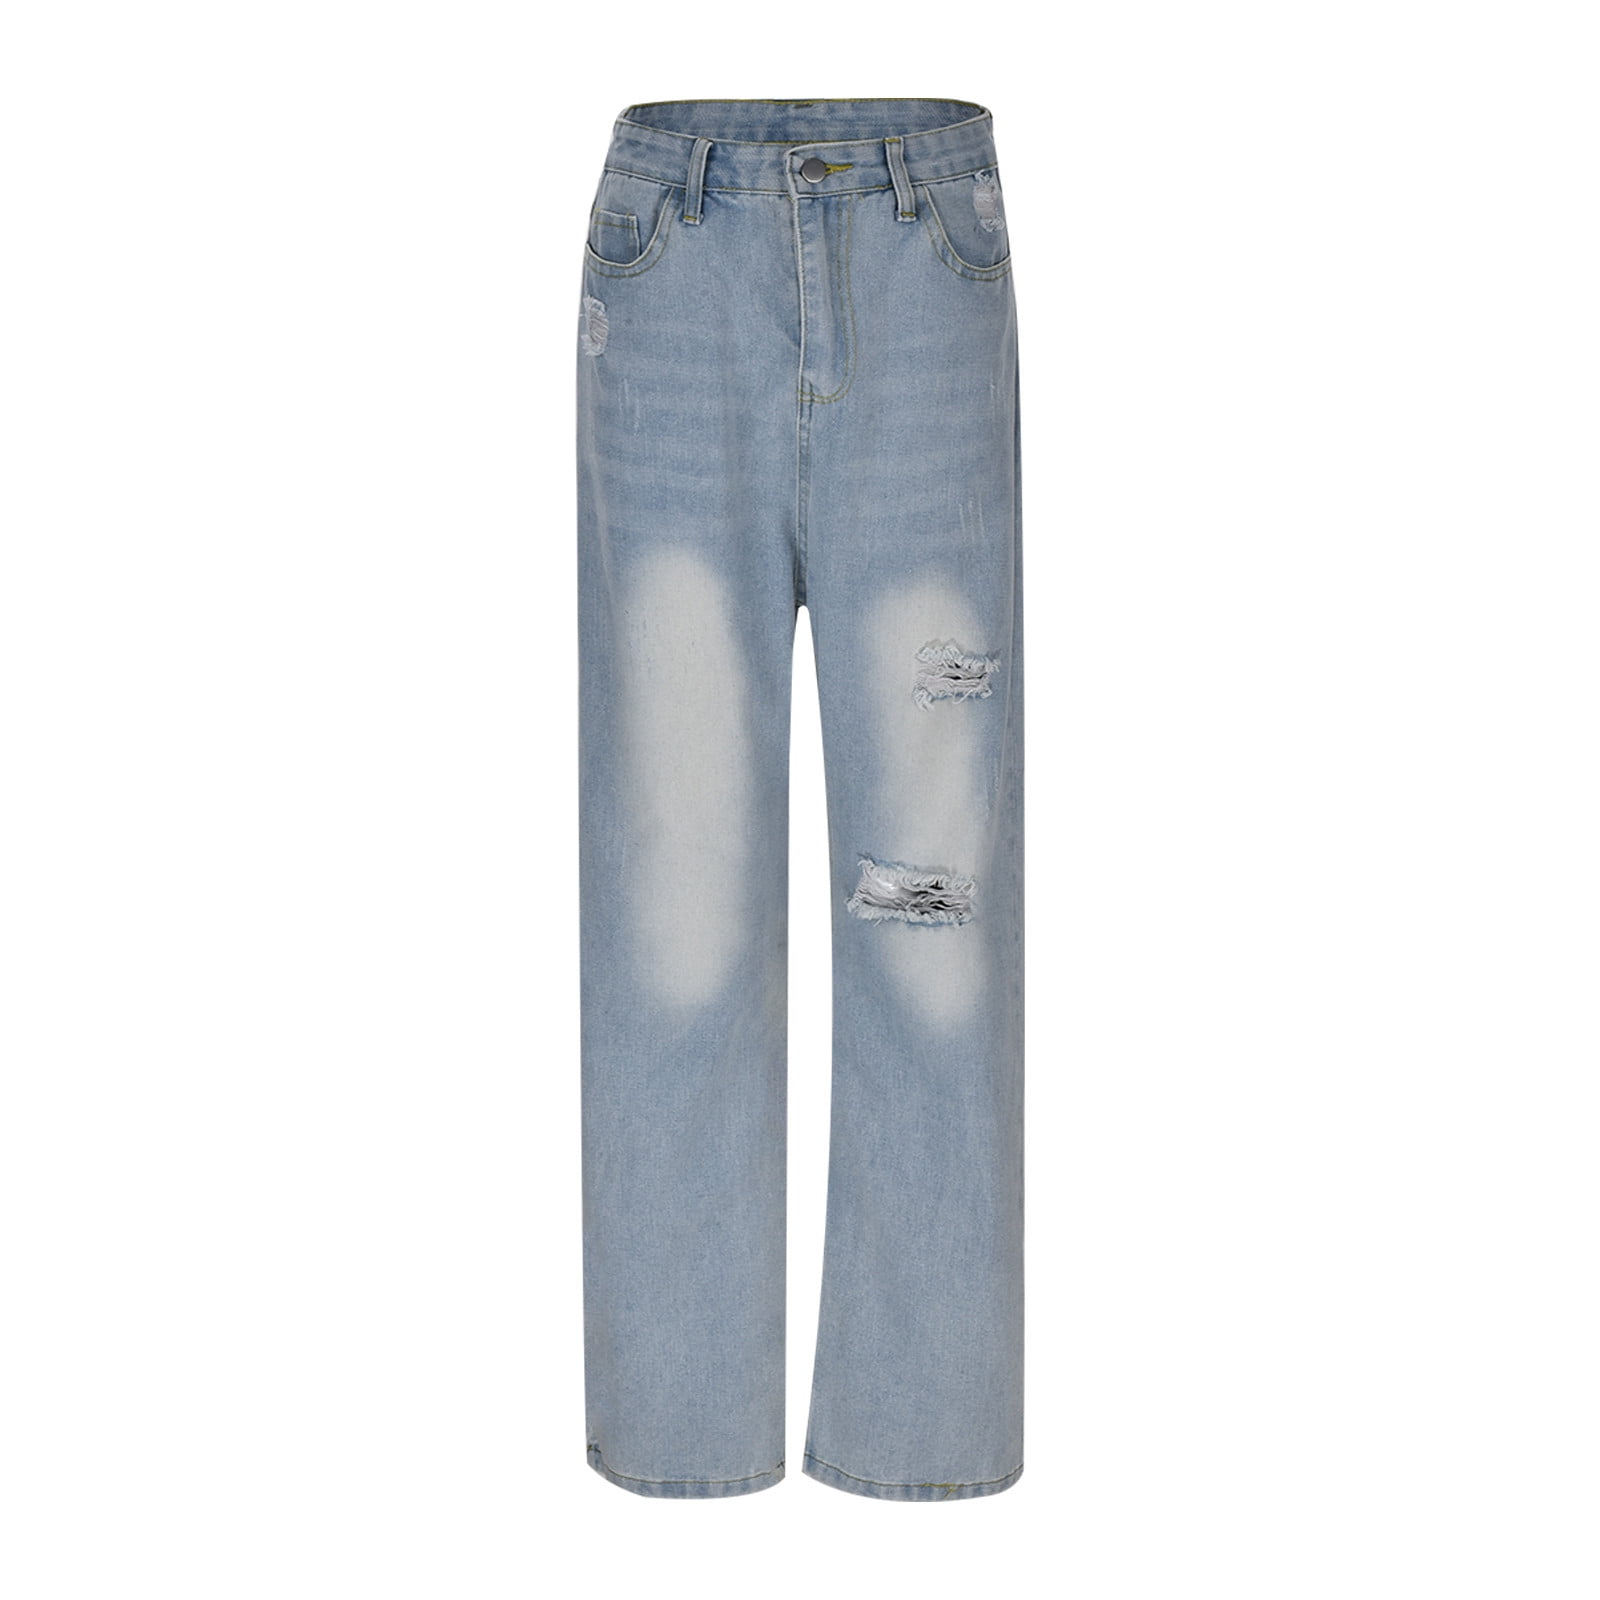 Denim Jeans - Citi Trends